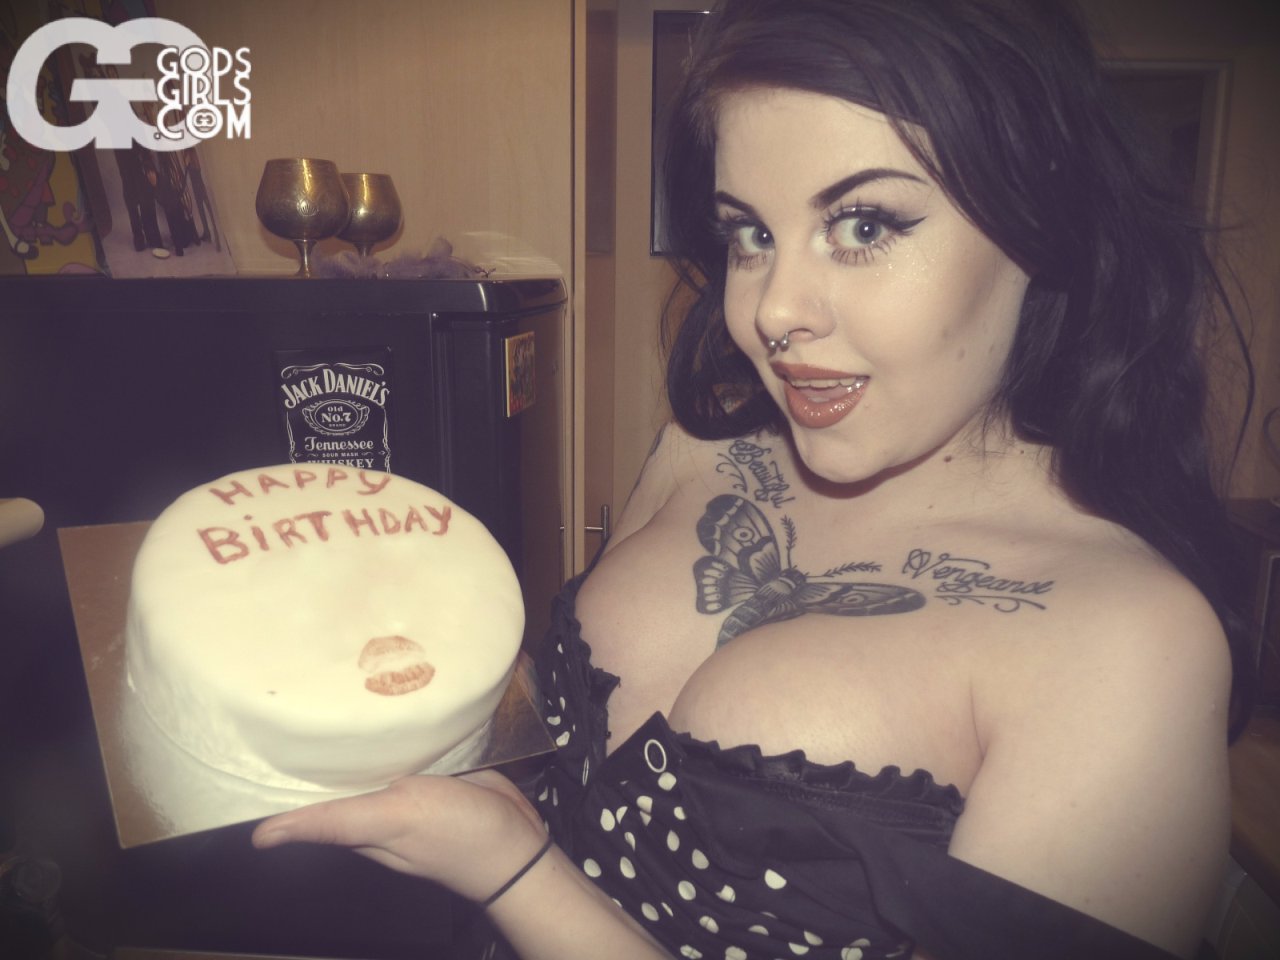 GodsGirls: Lea-Cheyenne Celebrates An Erotic Anniversary